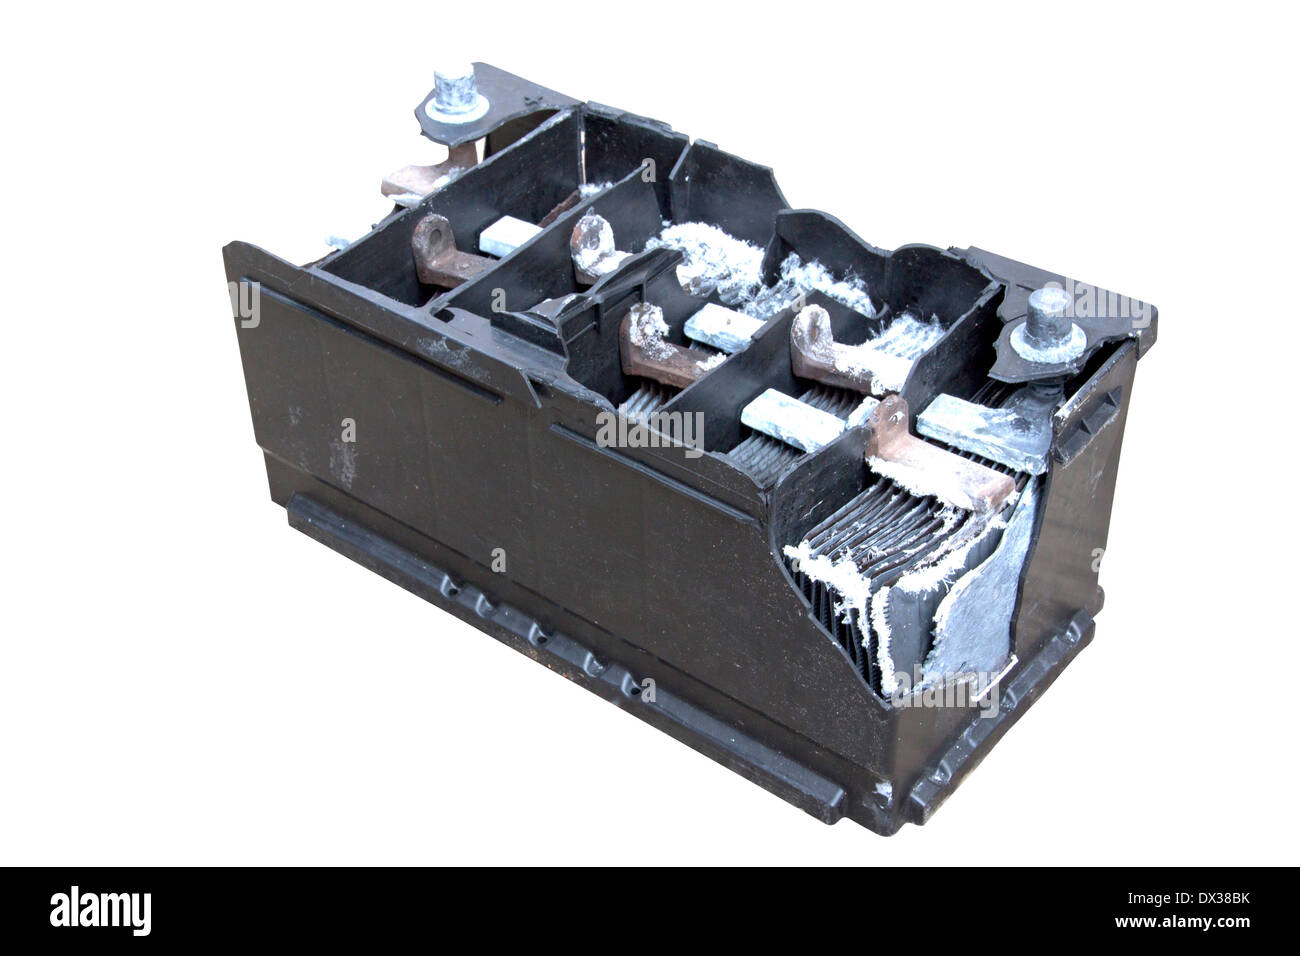 Kfz-Batterie durch interne Explosion zerstört Stockfotografie - Alamy